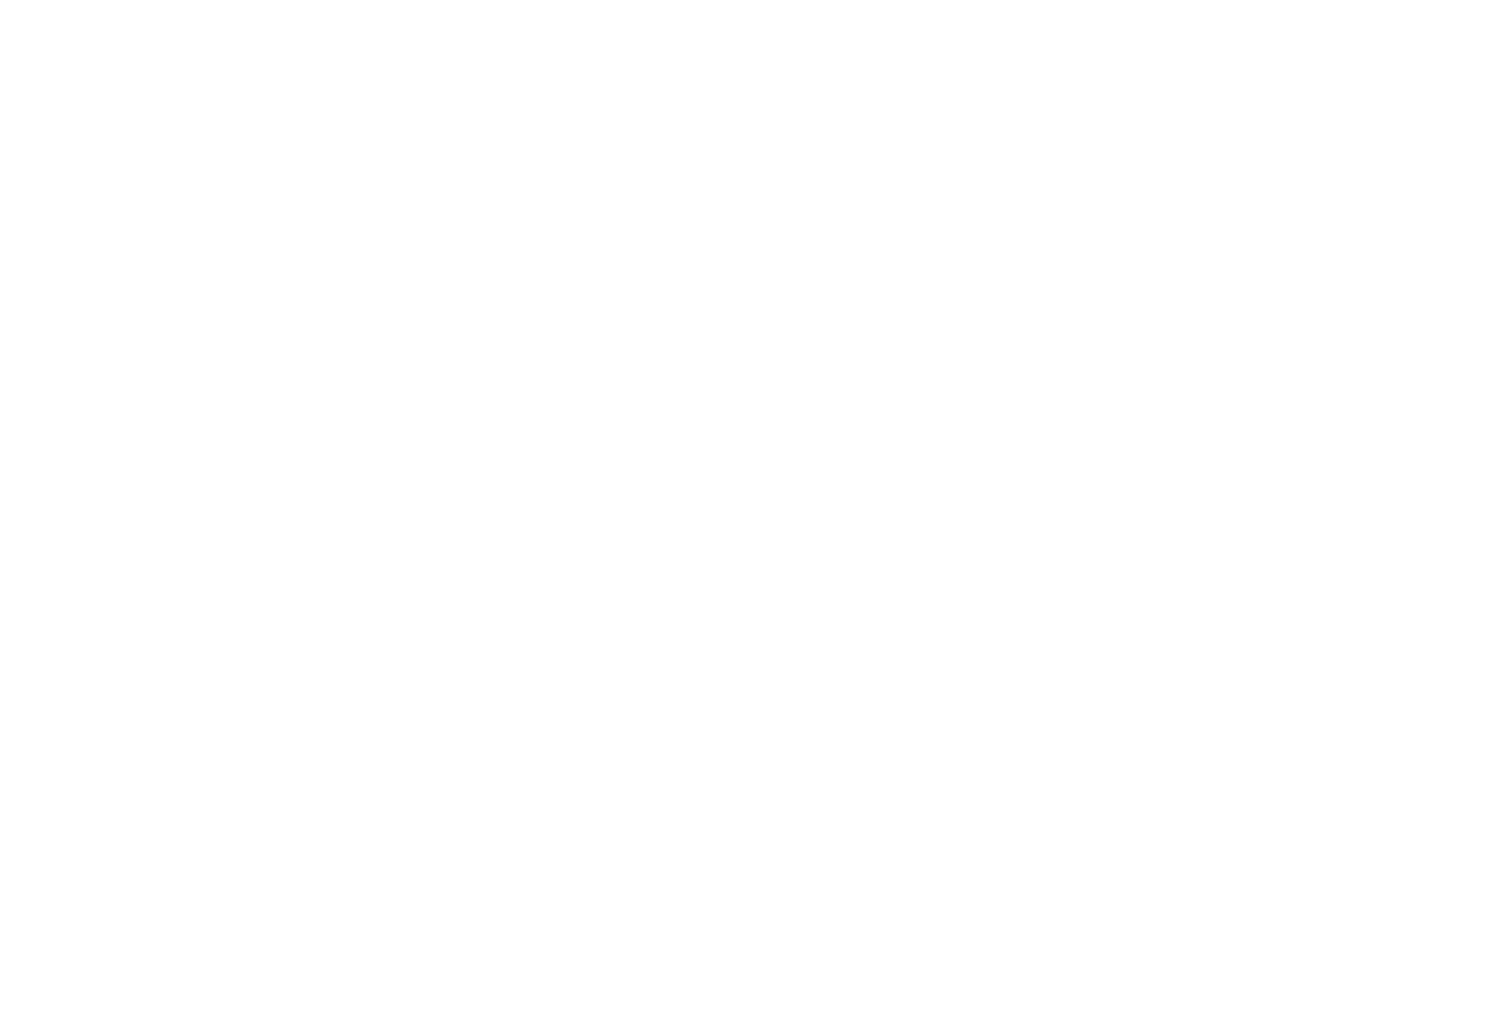 Barber Lane